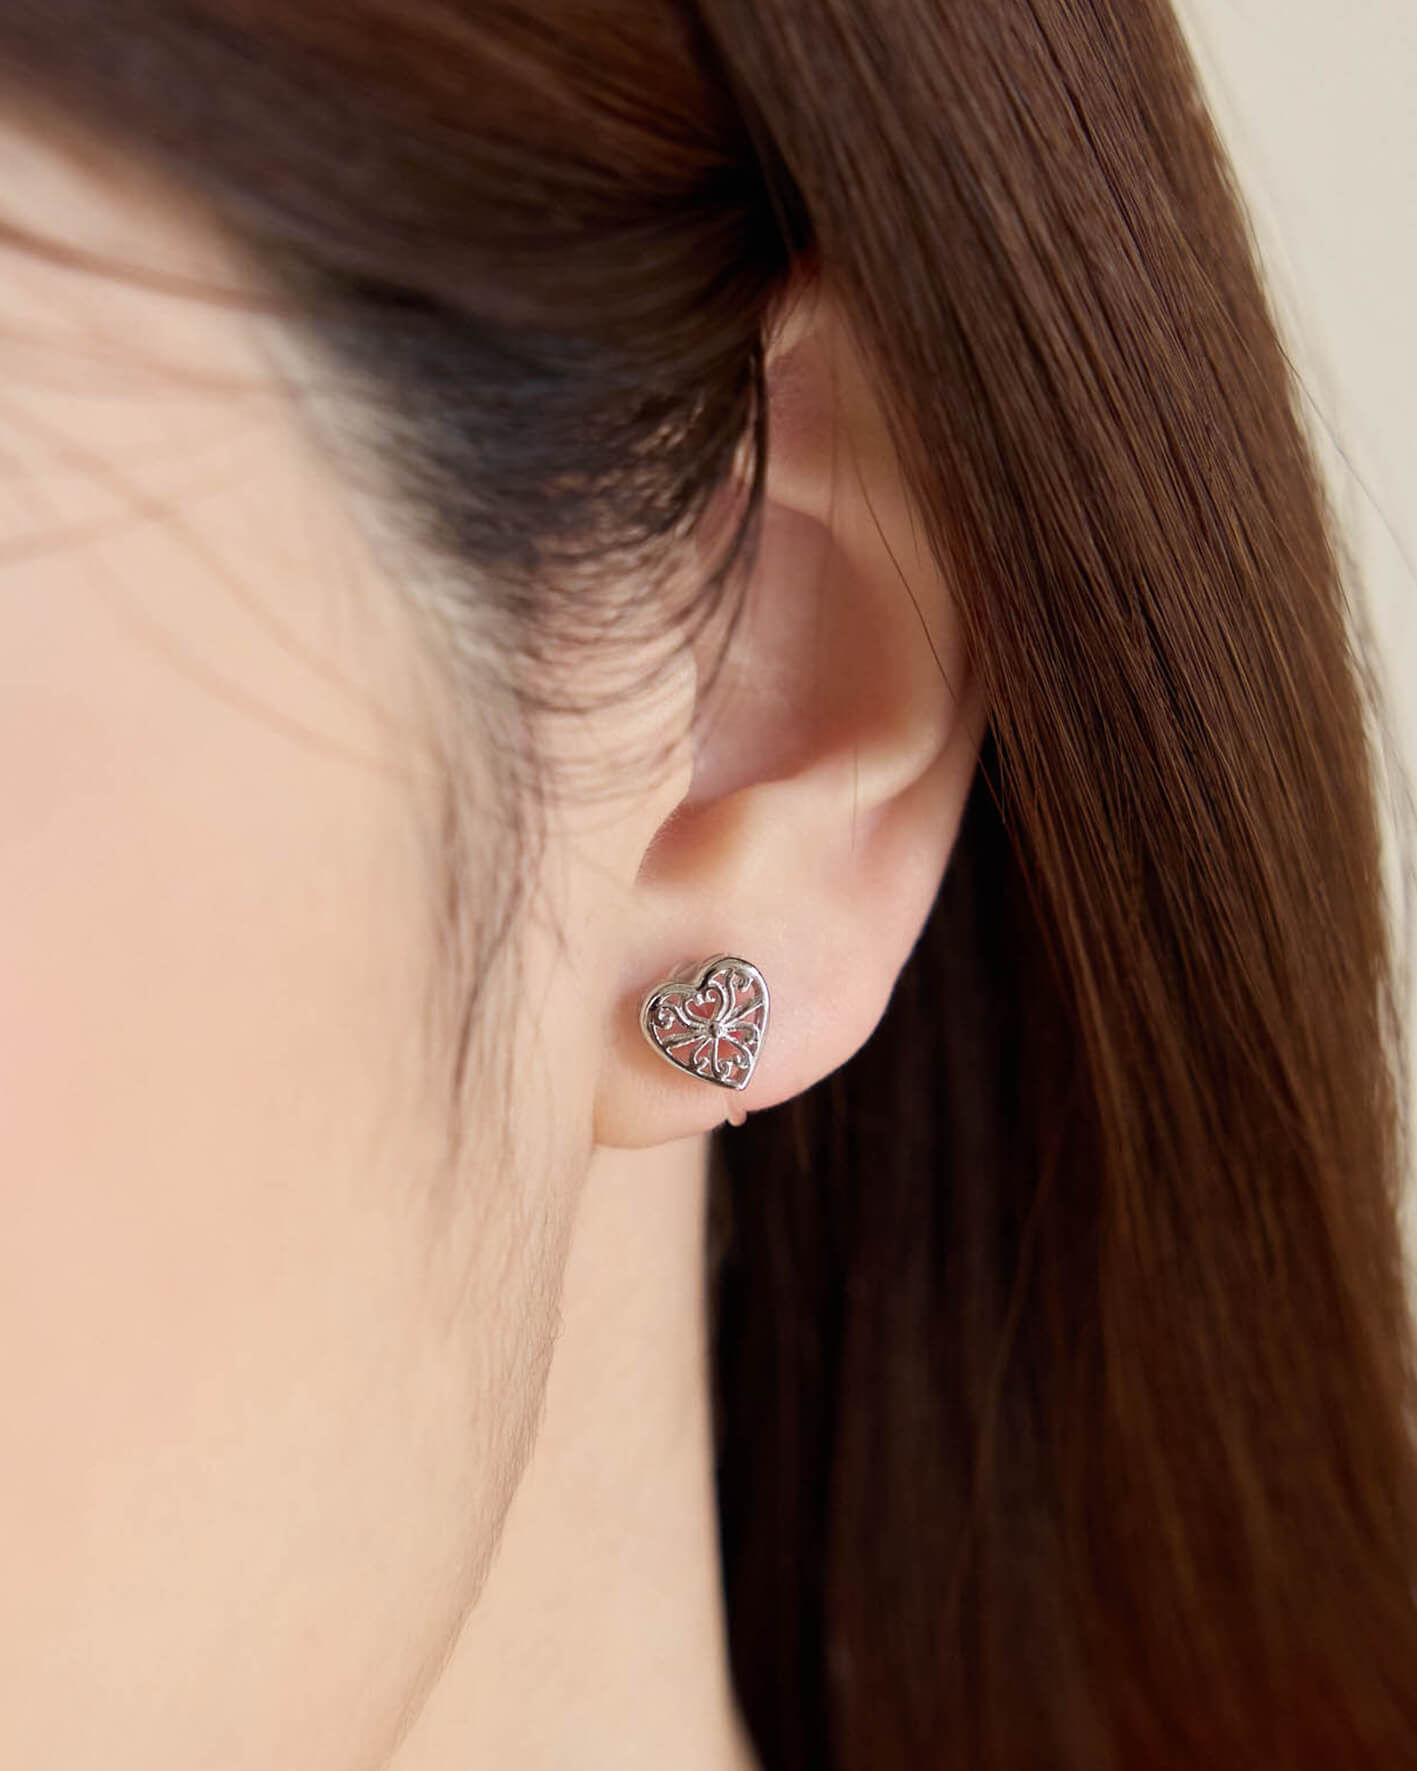 Eco安珂,韓國飾品,韓國耳環,韓國925純銀耳環,925純銀耳環,簡約耳環,貼耳耳環,氣質耳環,小耳環